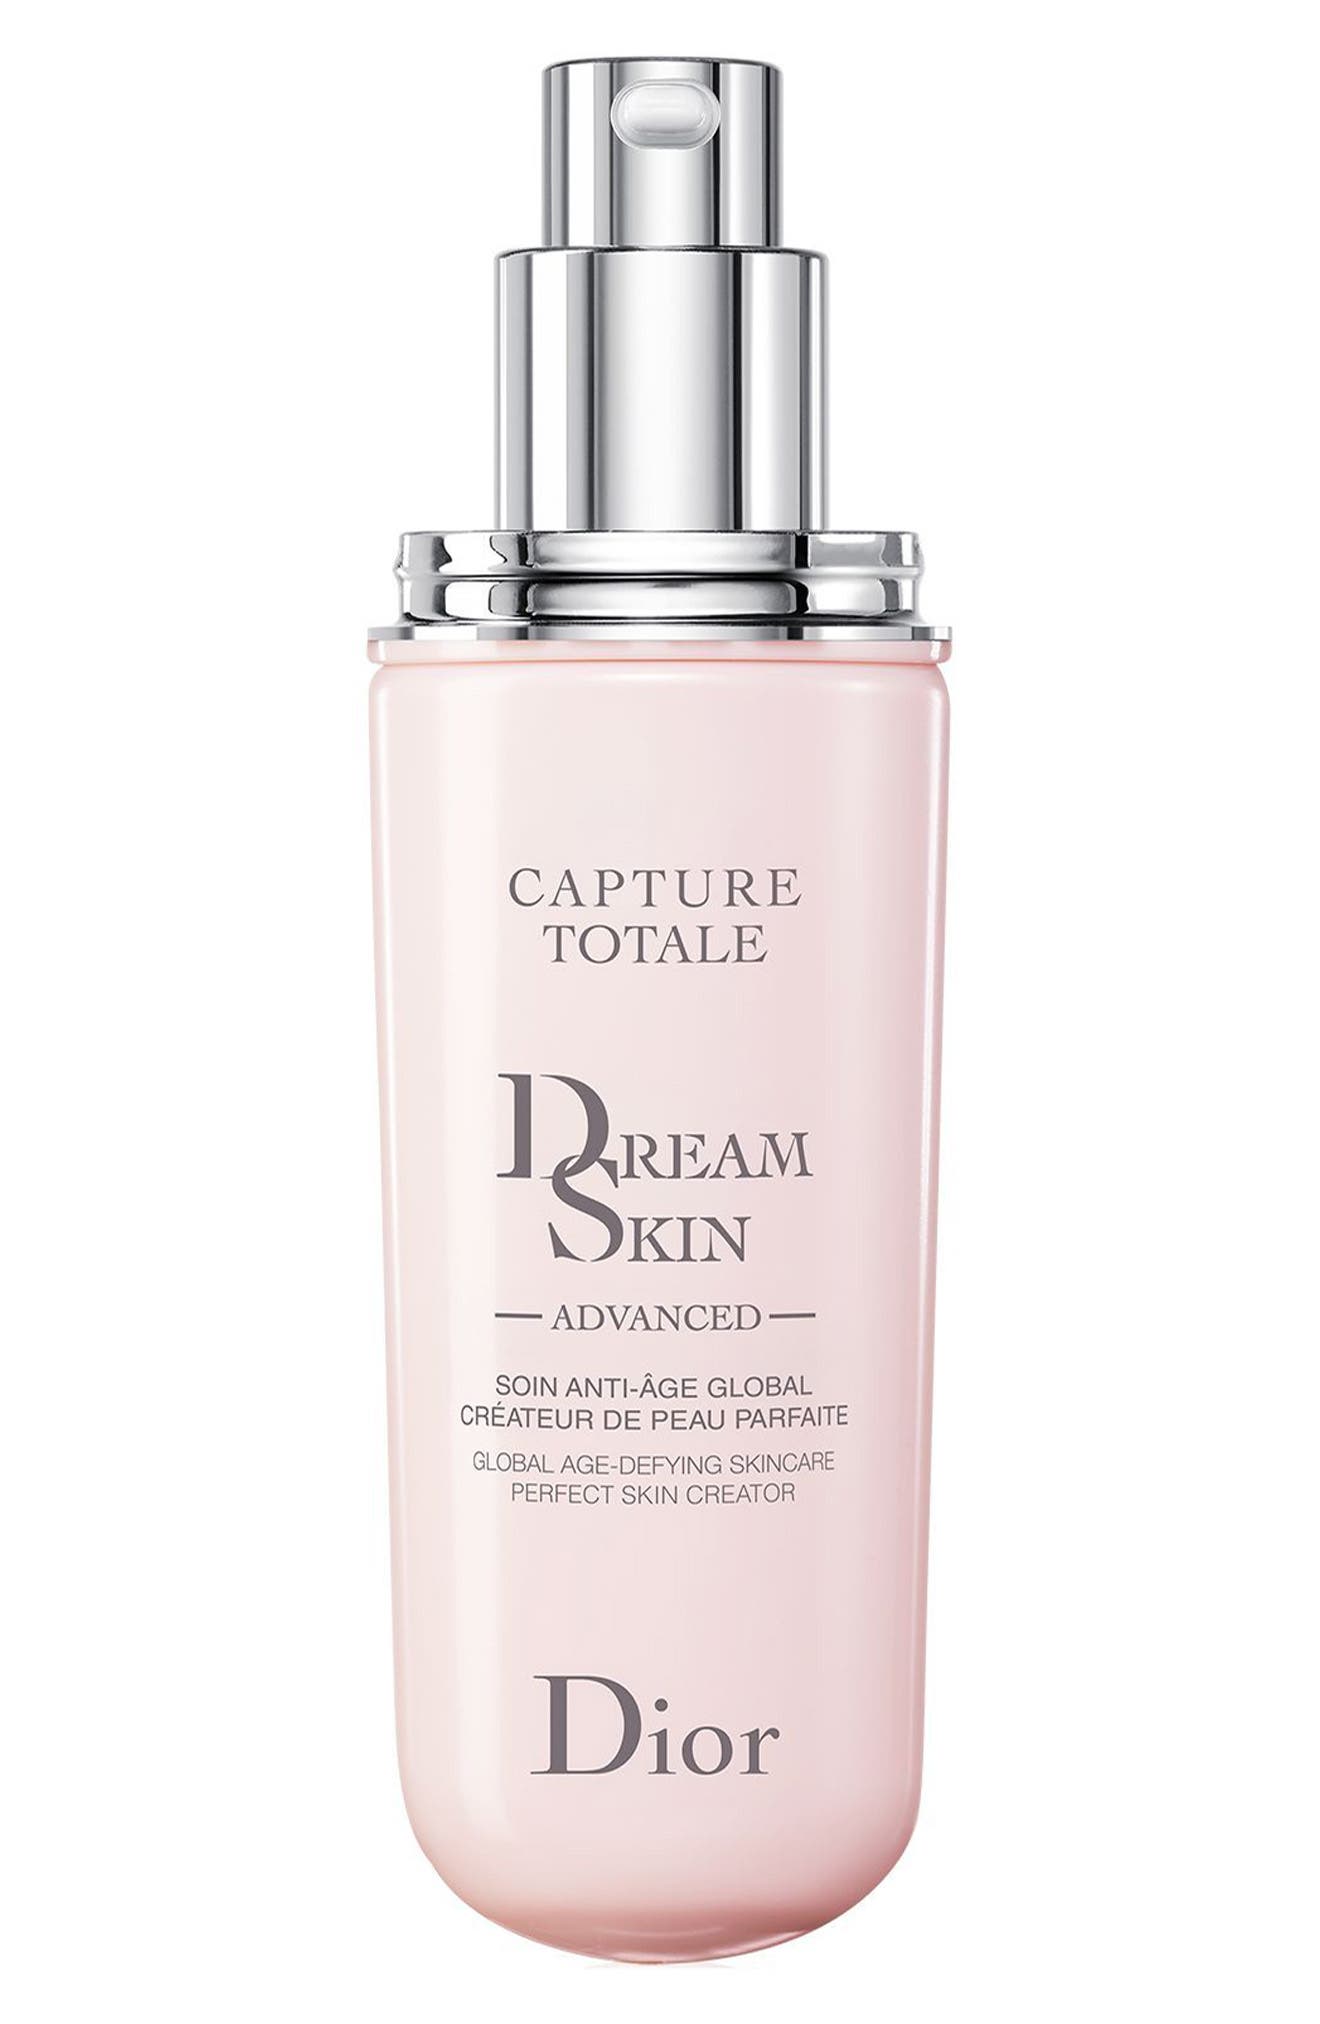 Dior Capture Totale DreamSkin Advanced 